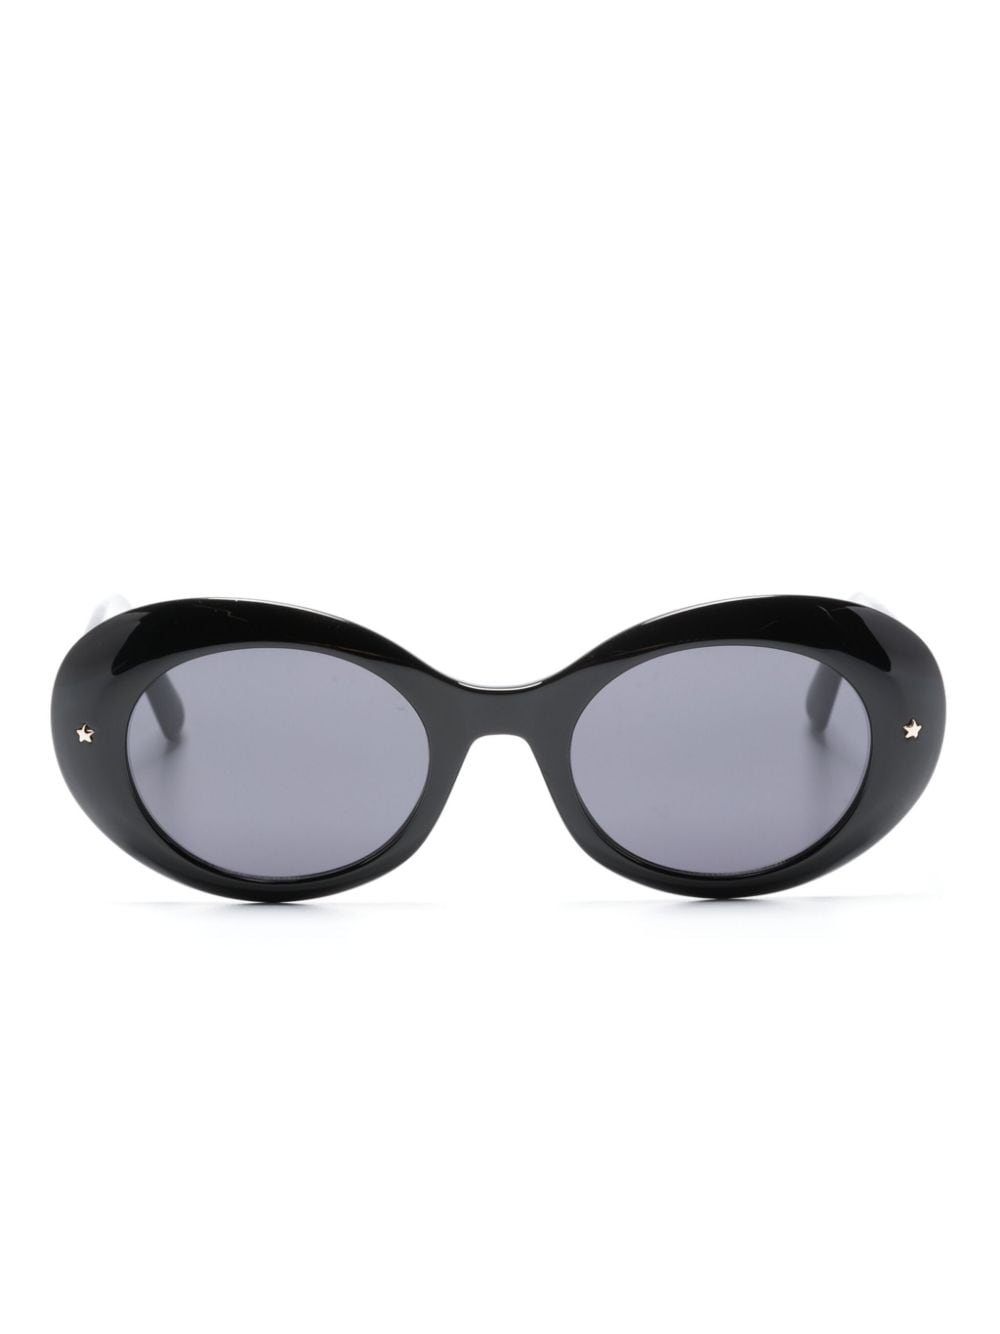 Chiara Ferragni CF 7004/S 807IR oval-frame sunglasses - Black von Chiara Ferragni